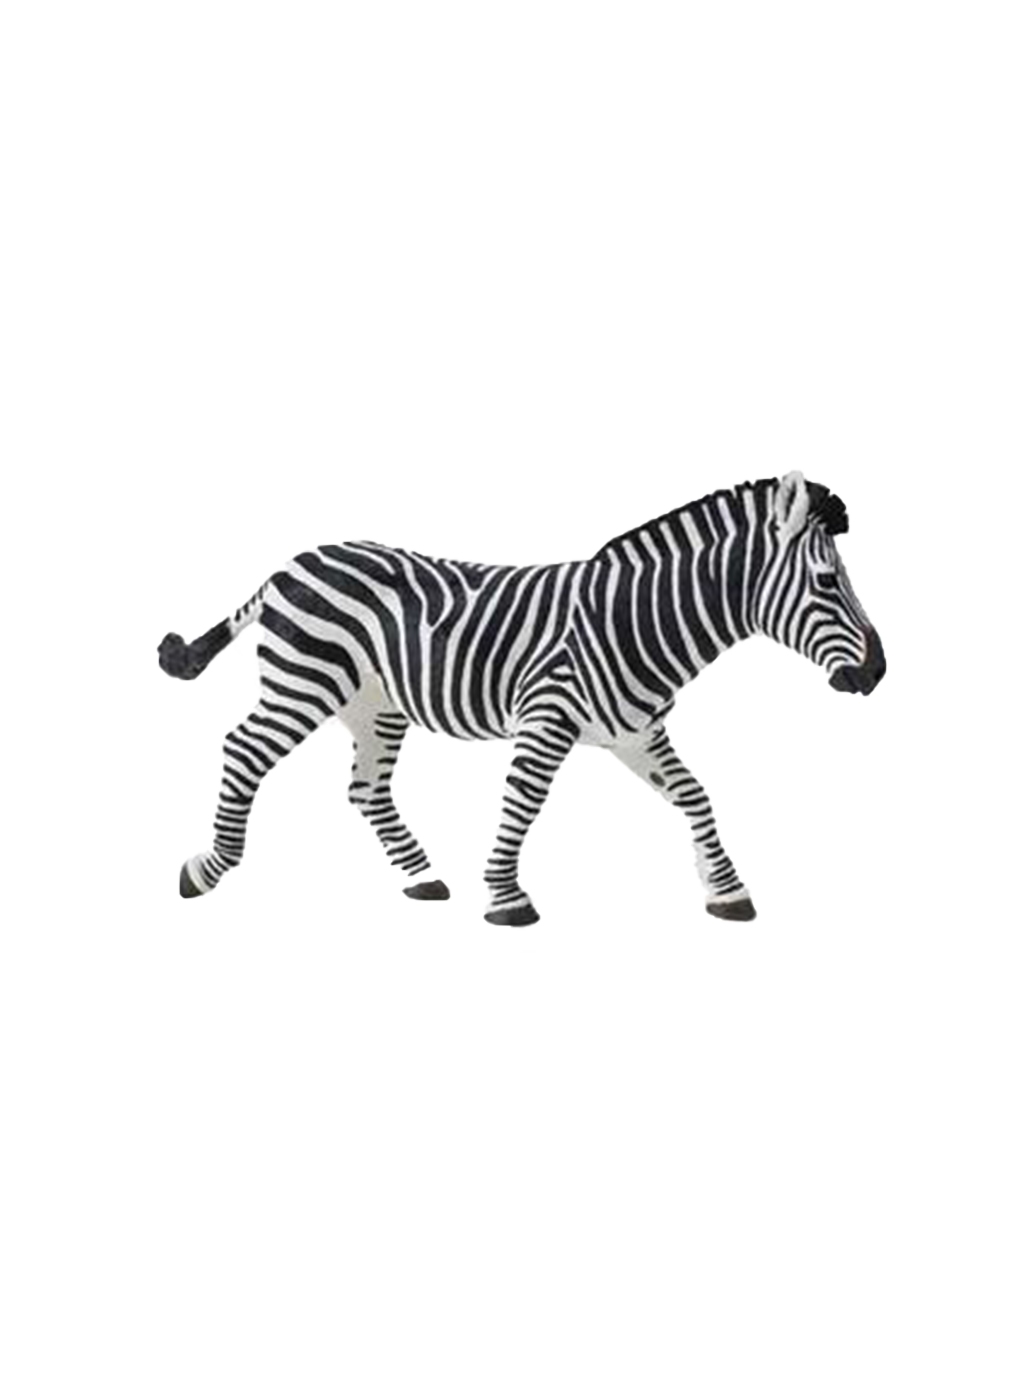 A large zebra figurine